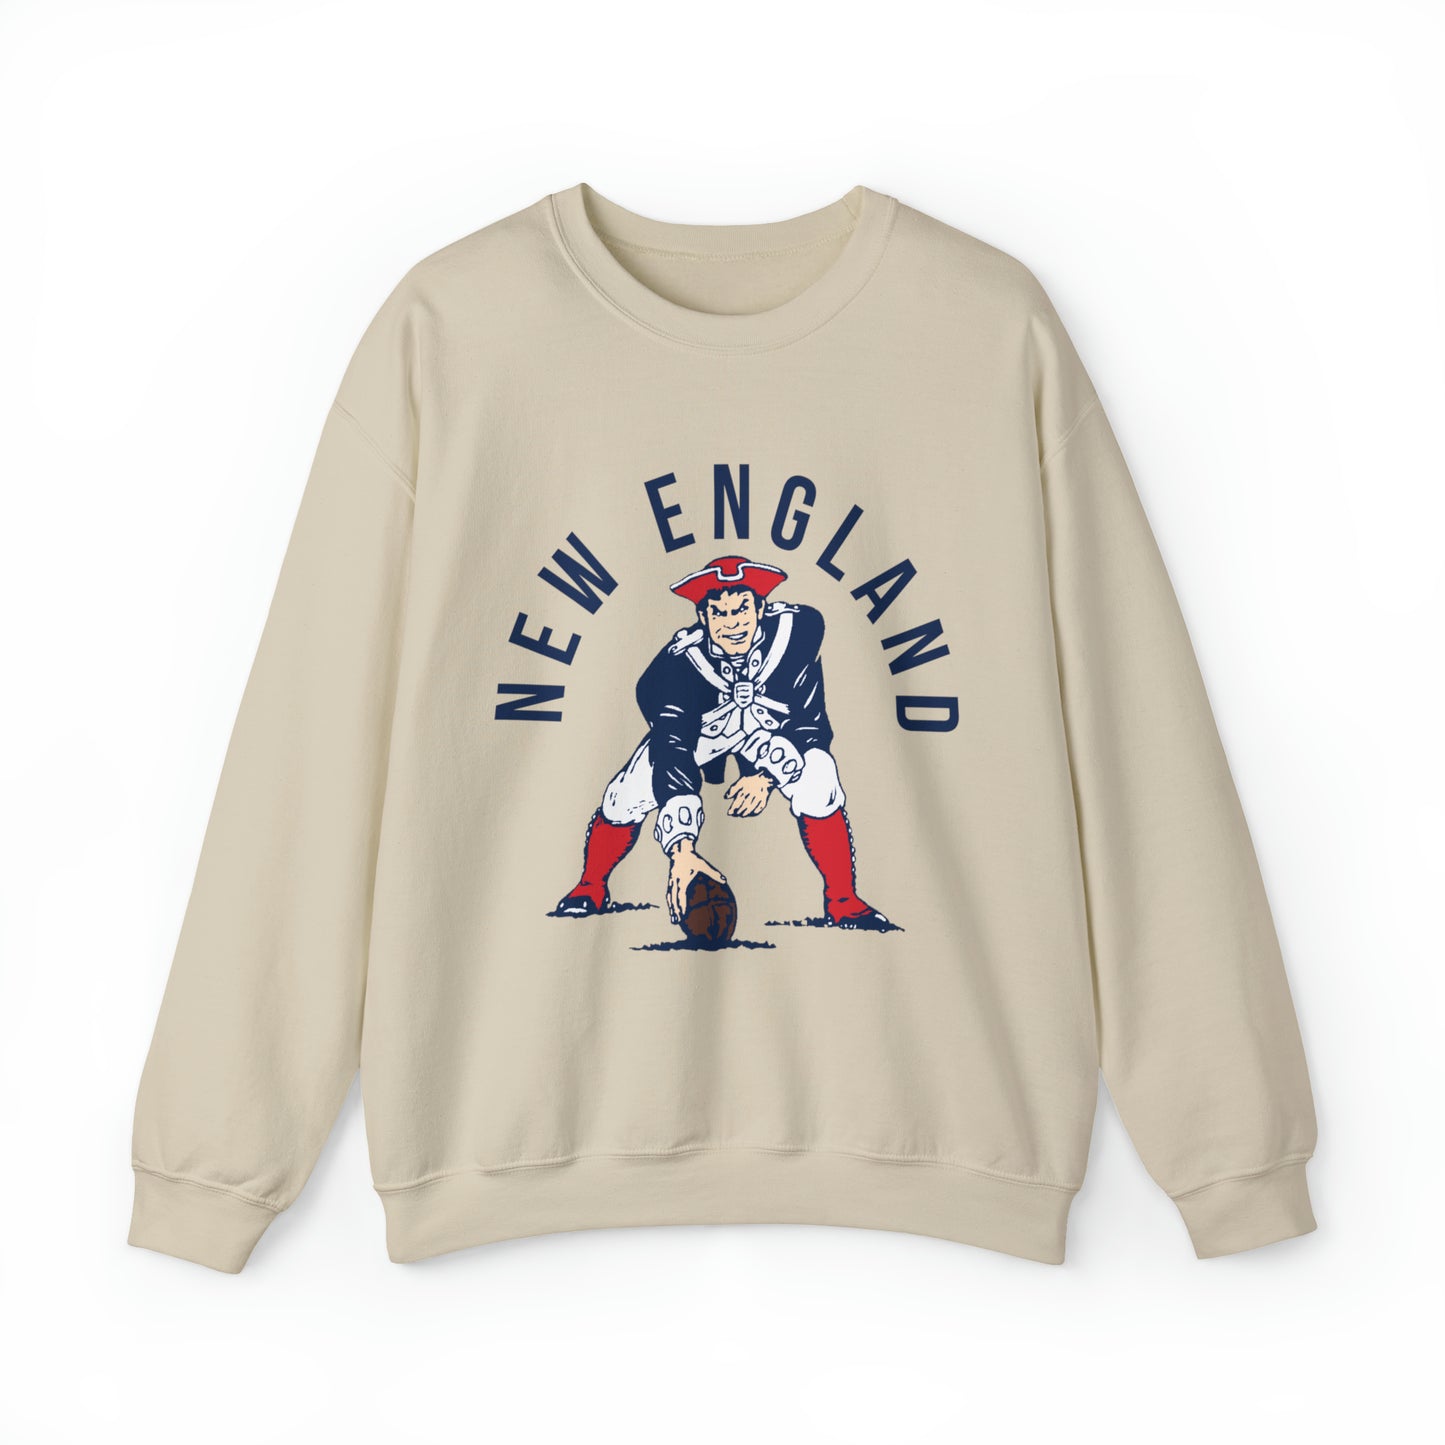 Throwback New England Patriots Sweatshirt - Vintage Style Football Crewneck - Men's & Women's Football Apparel